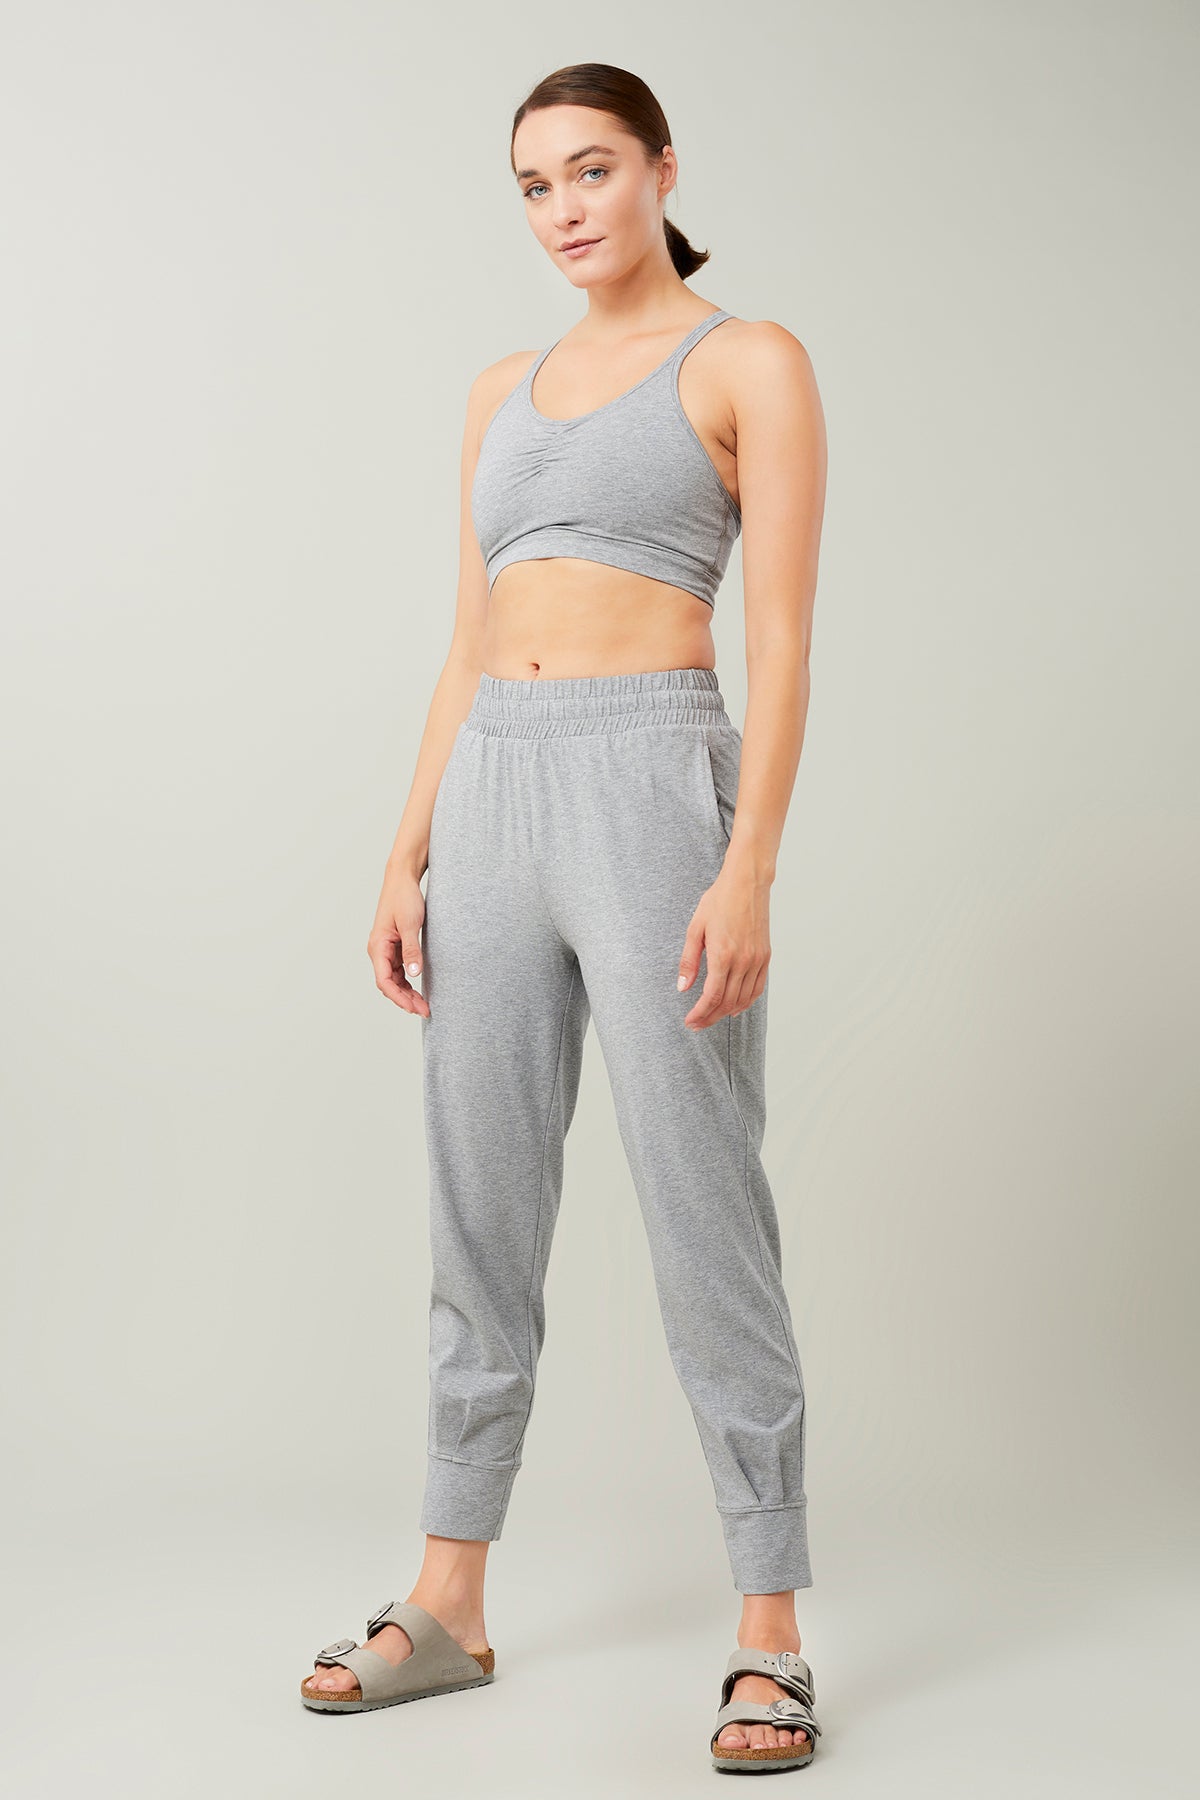 Mandala Yoga Pant Grau Outfit Front - Cuffed Track Pants